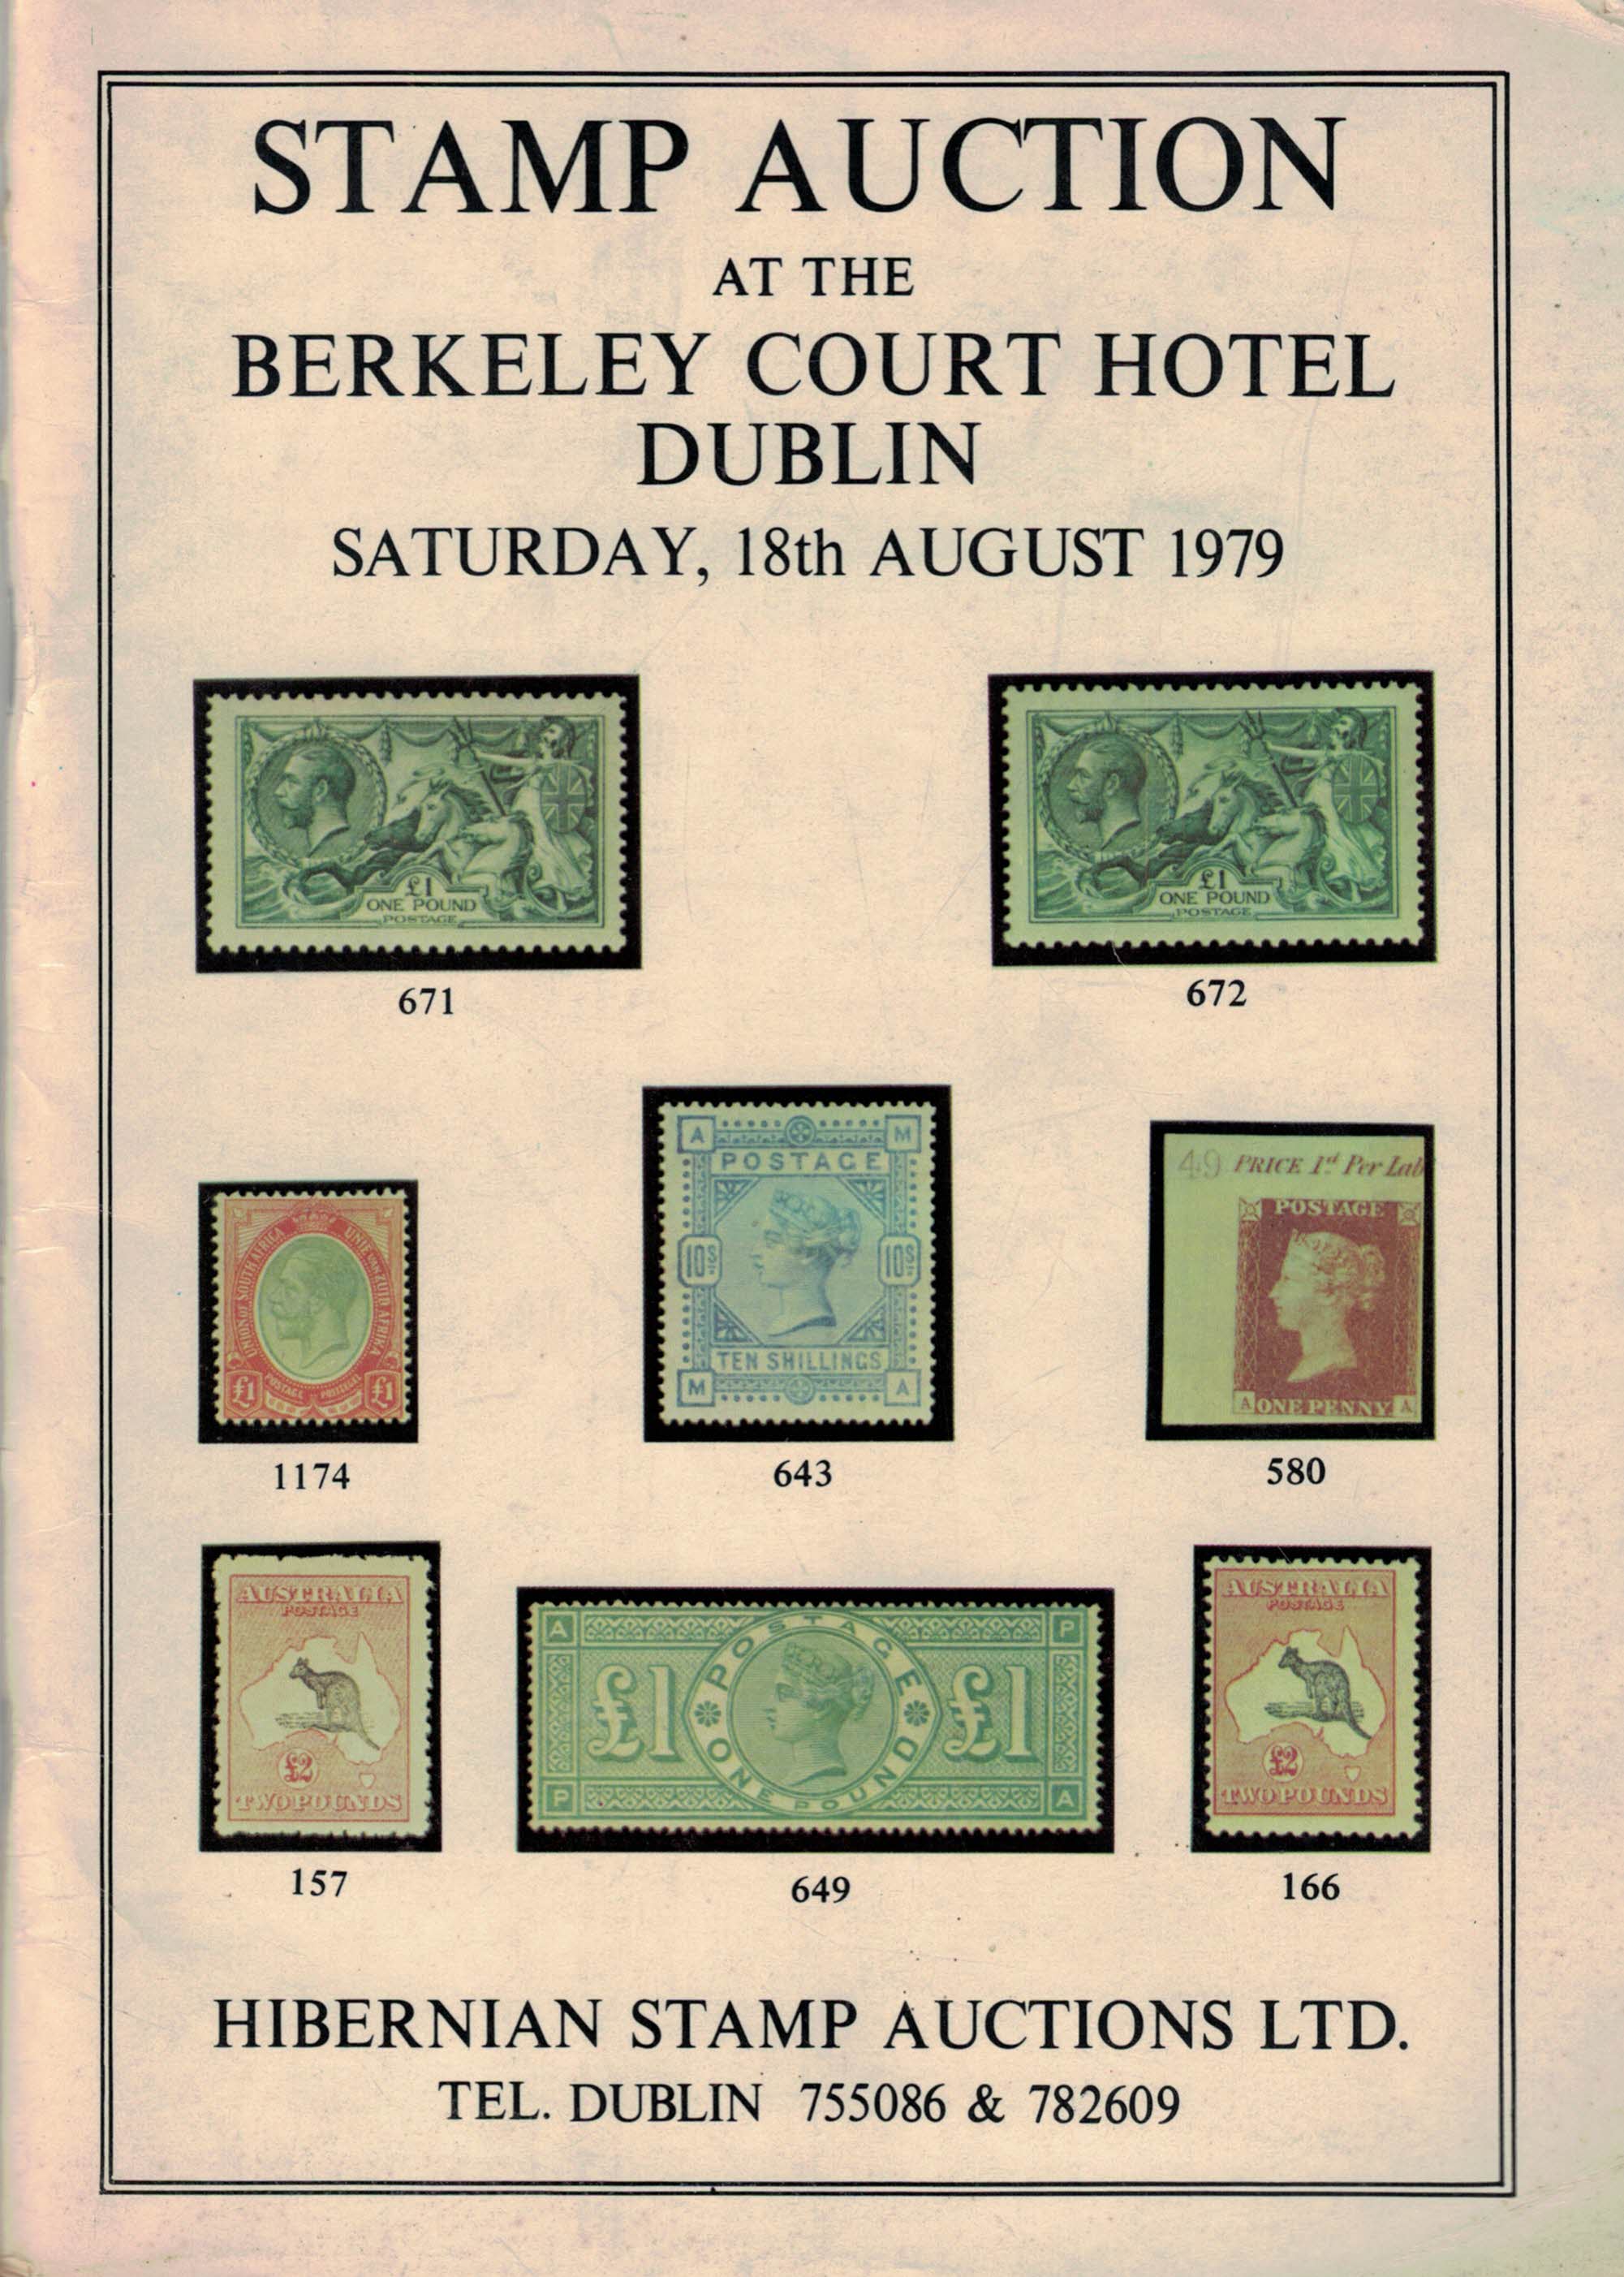 International Postage Stamp Auction. Saturday, 18th August 1979 at the Berkeley Court Hotel, Dublin, Ireland.